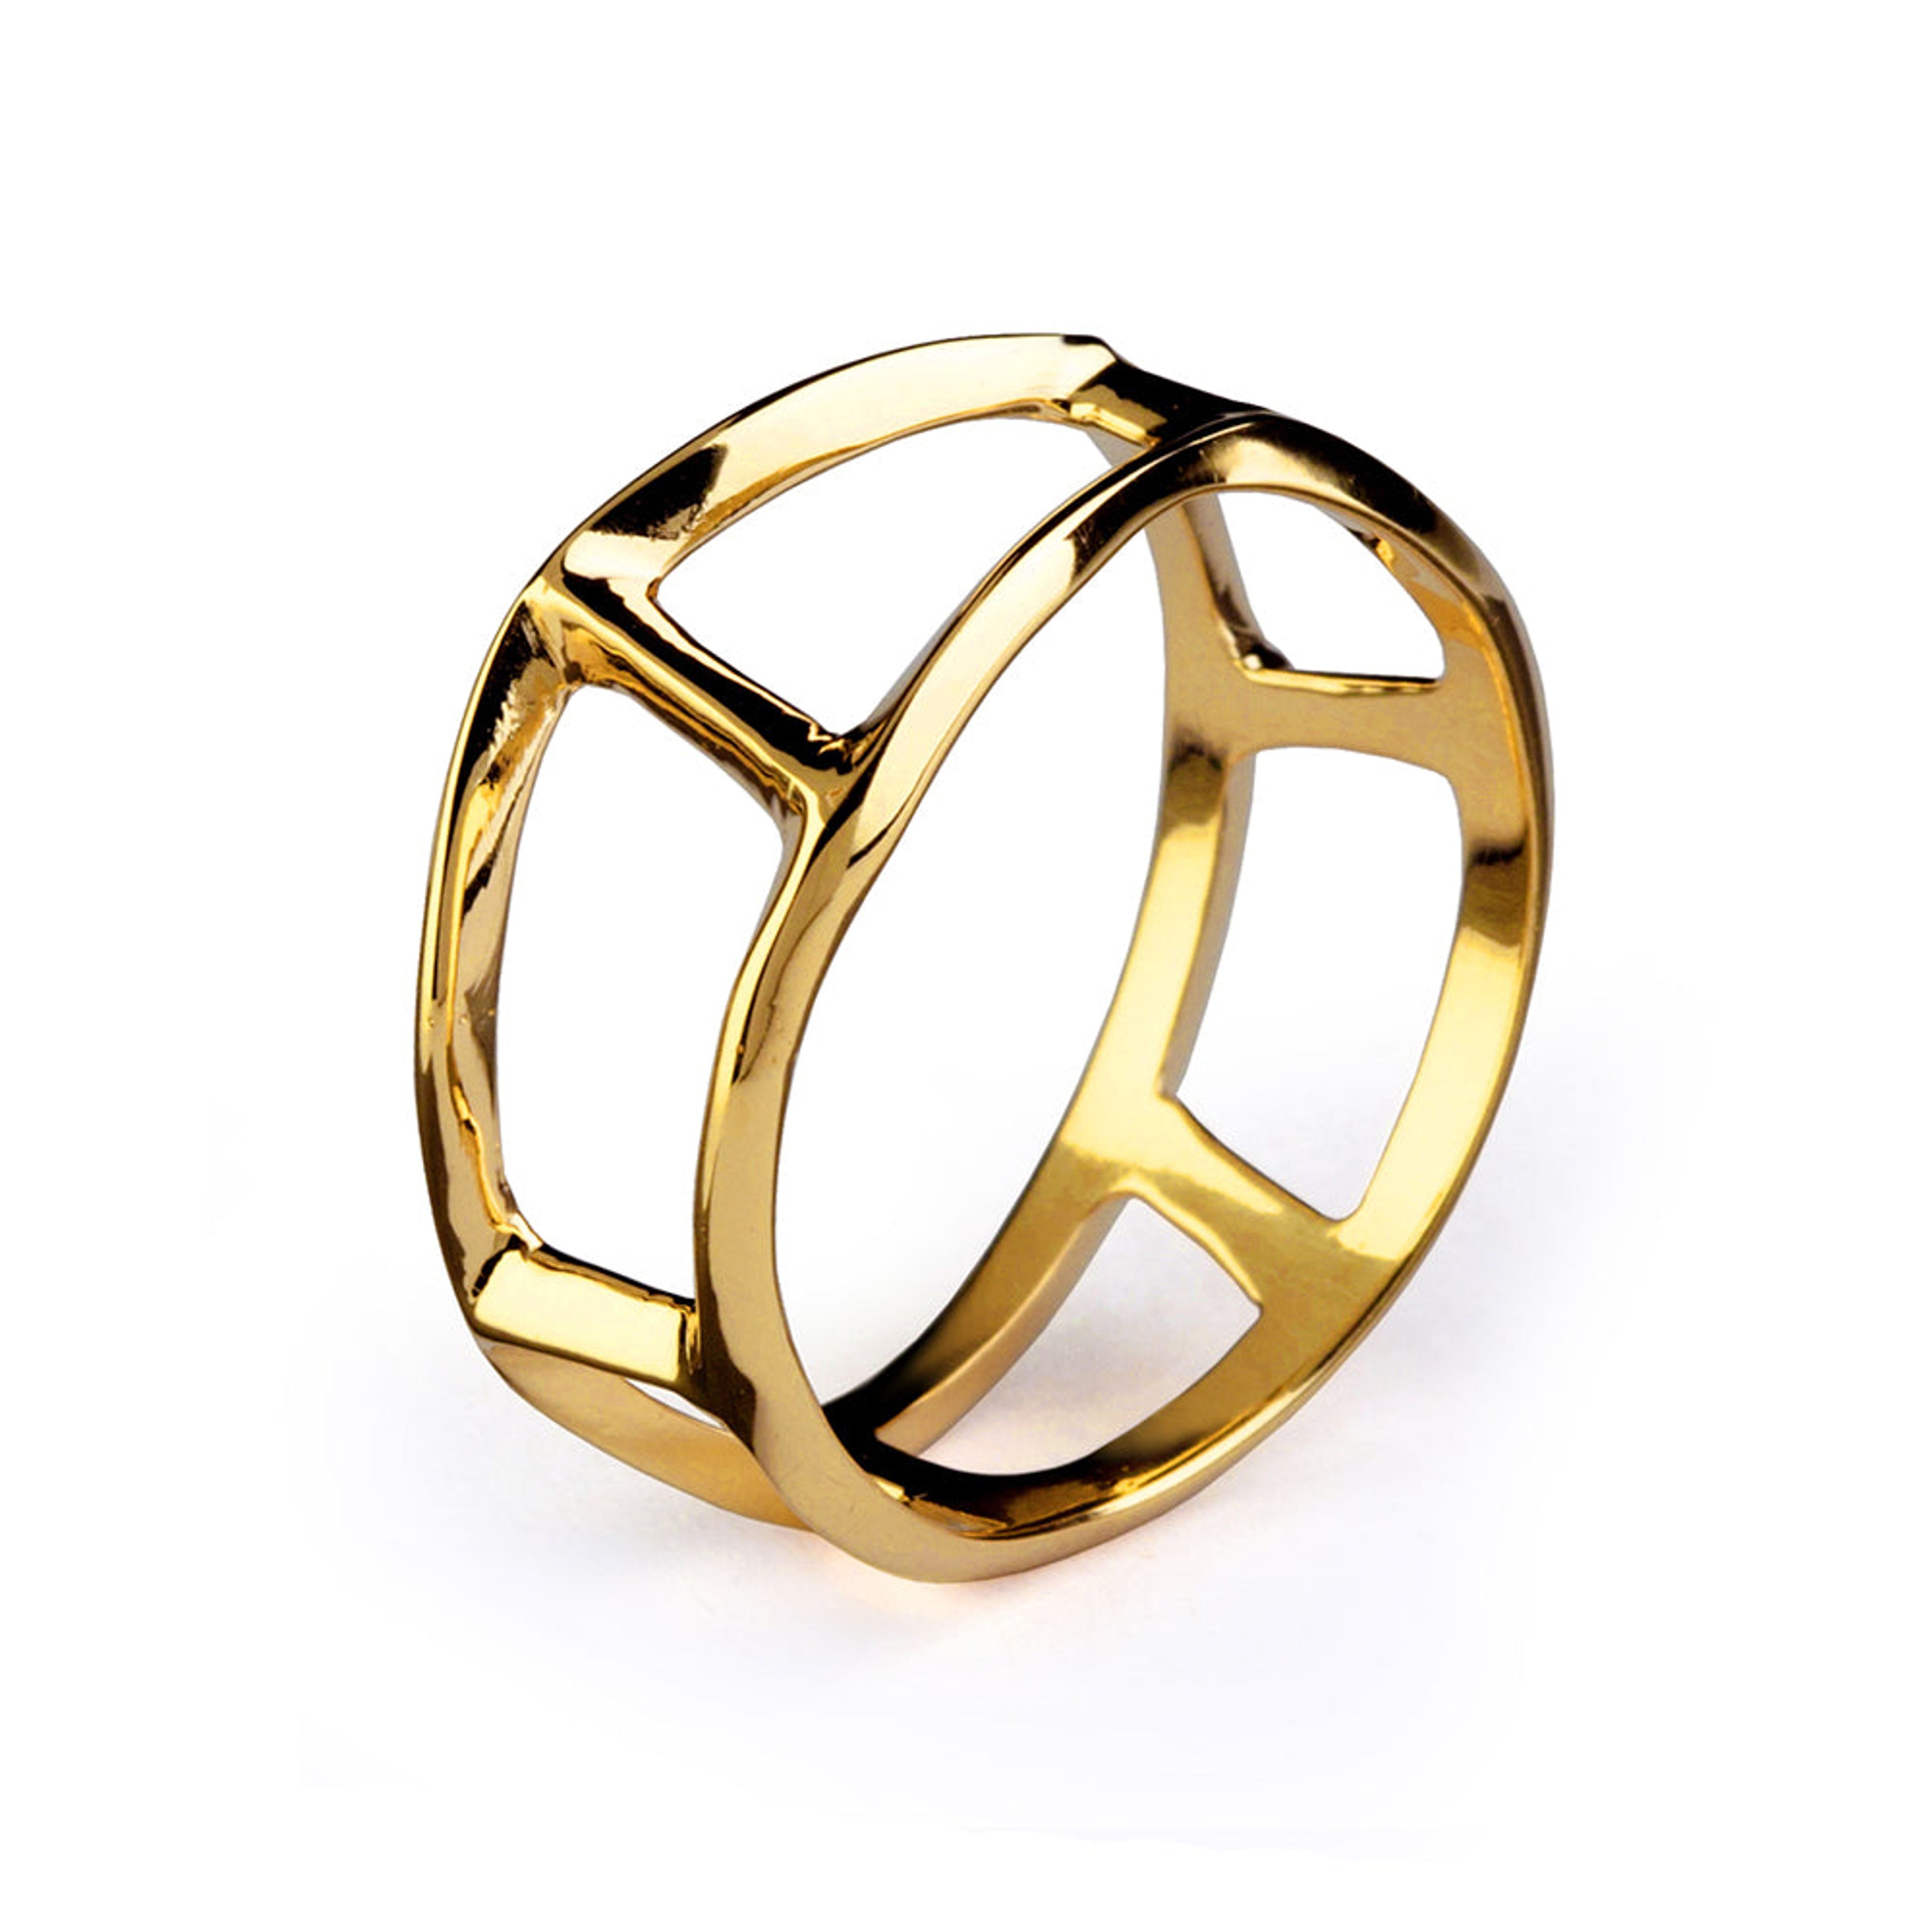 Dandy Gold Wedding Band Ring